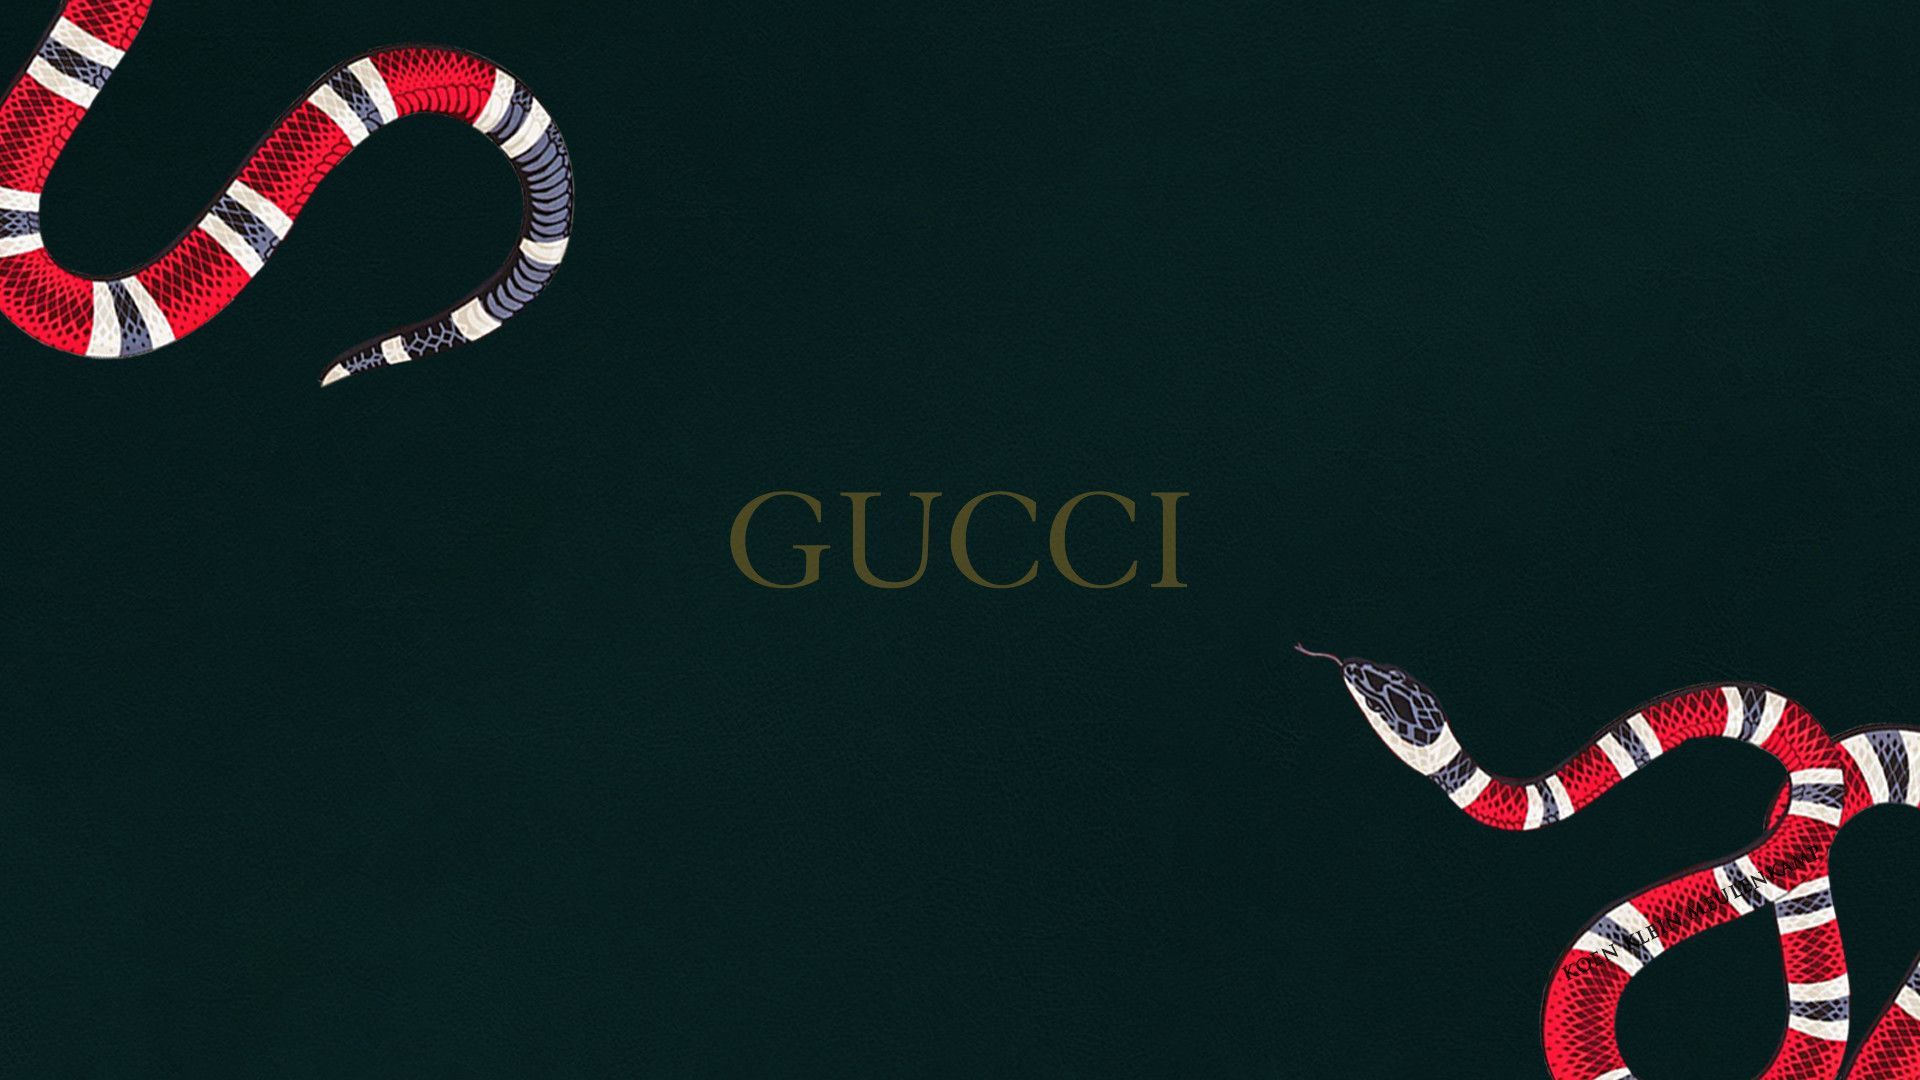 Supreme Gucci Pc Wallpapers On Wallpaperdog